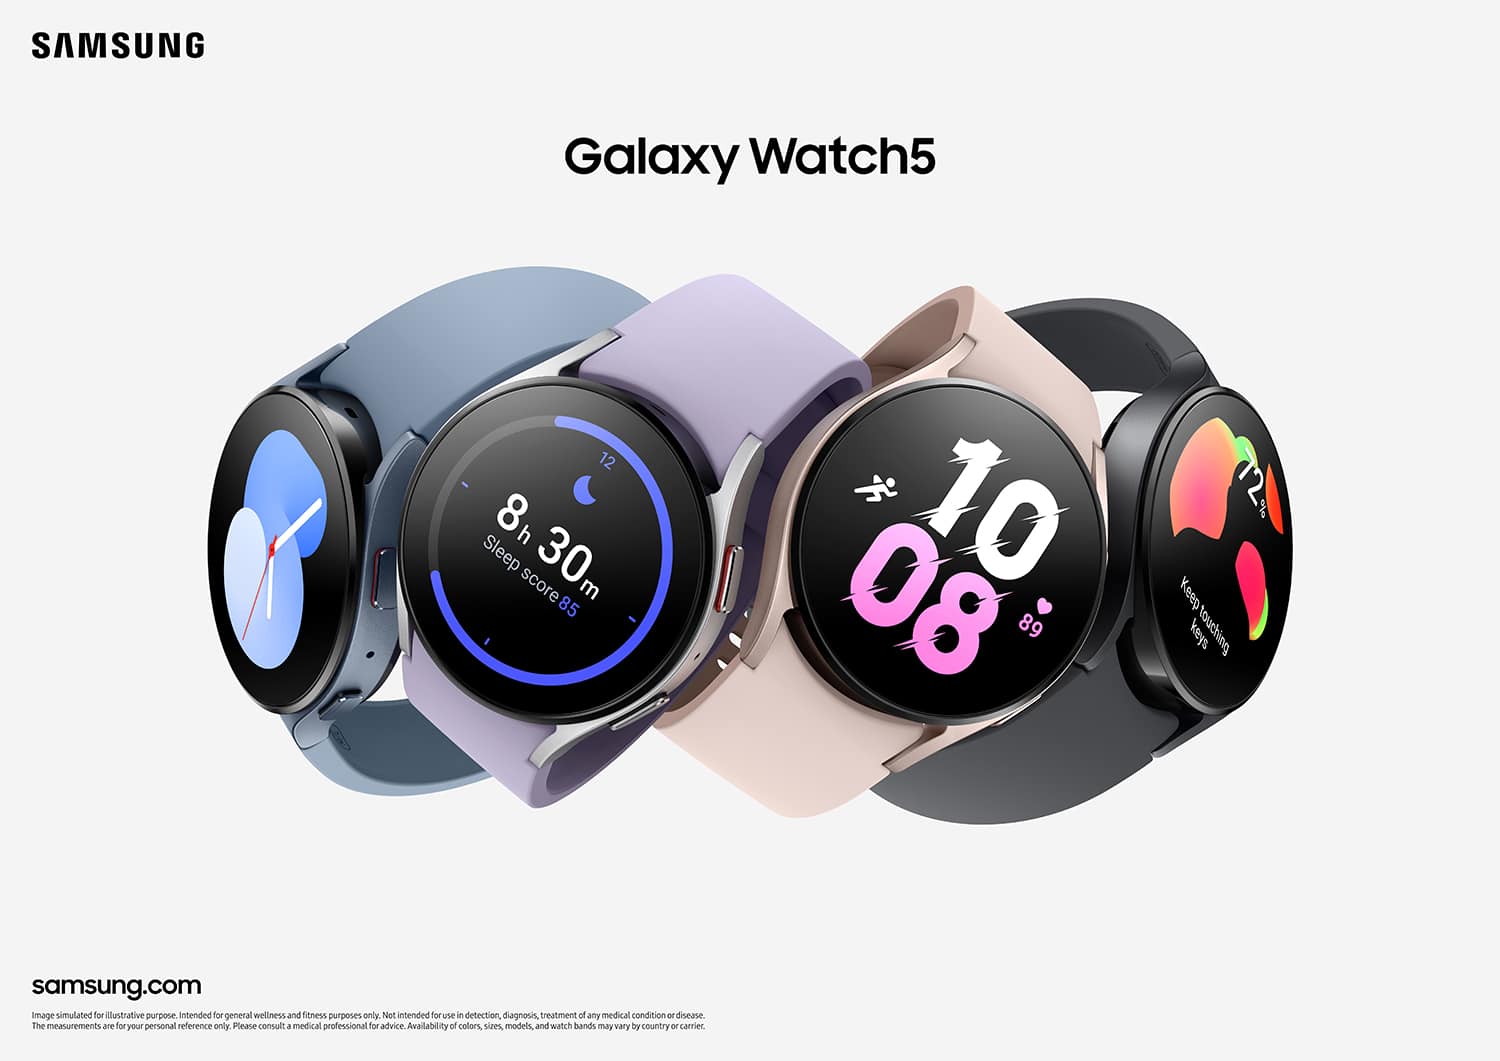 Samsungが新型スマートウォッチ「Galaxy Watch 5」及び「Galaxy Watch 5 Pro」を海外で発表 – 体温センサーとサファイアガラス採用